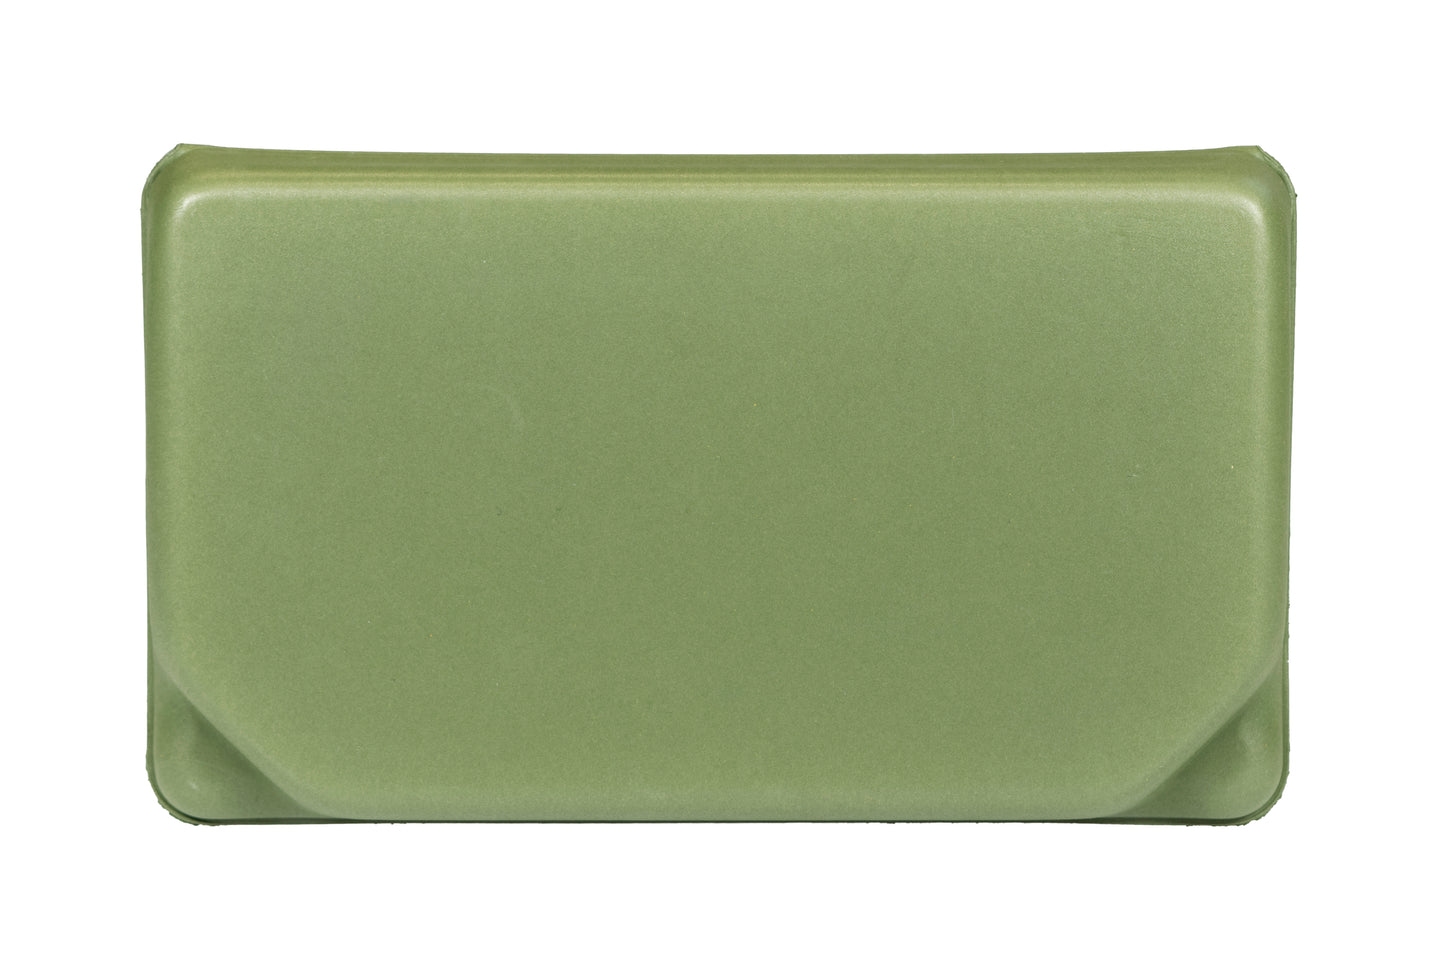 Light Weight Floating Olive Green EVA Fly Box- Standard Pocket Size #M 1531